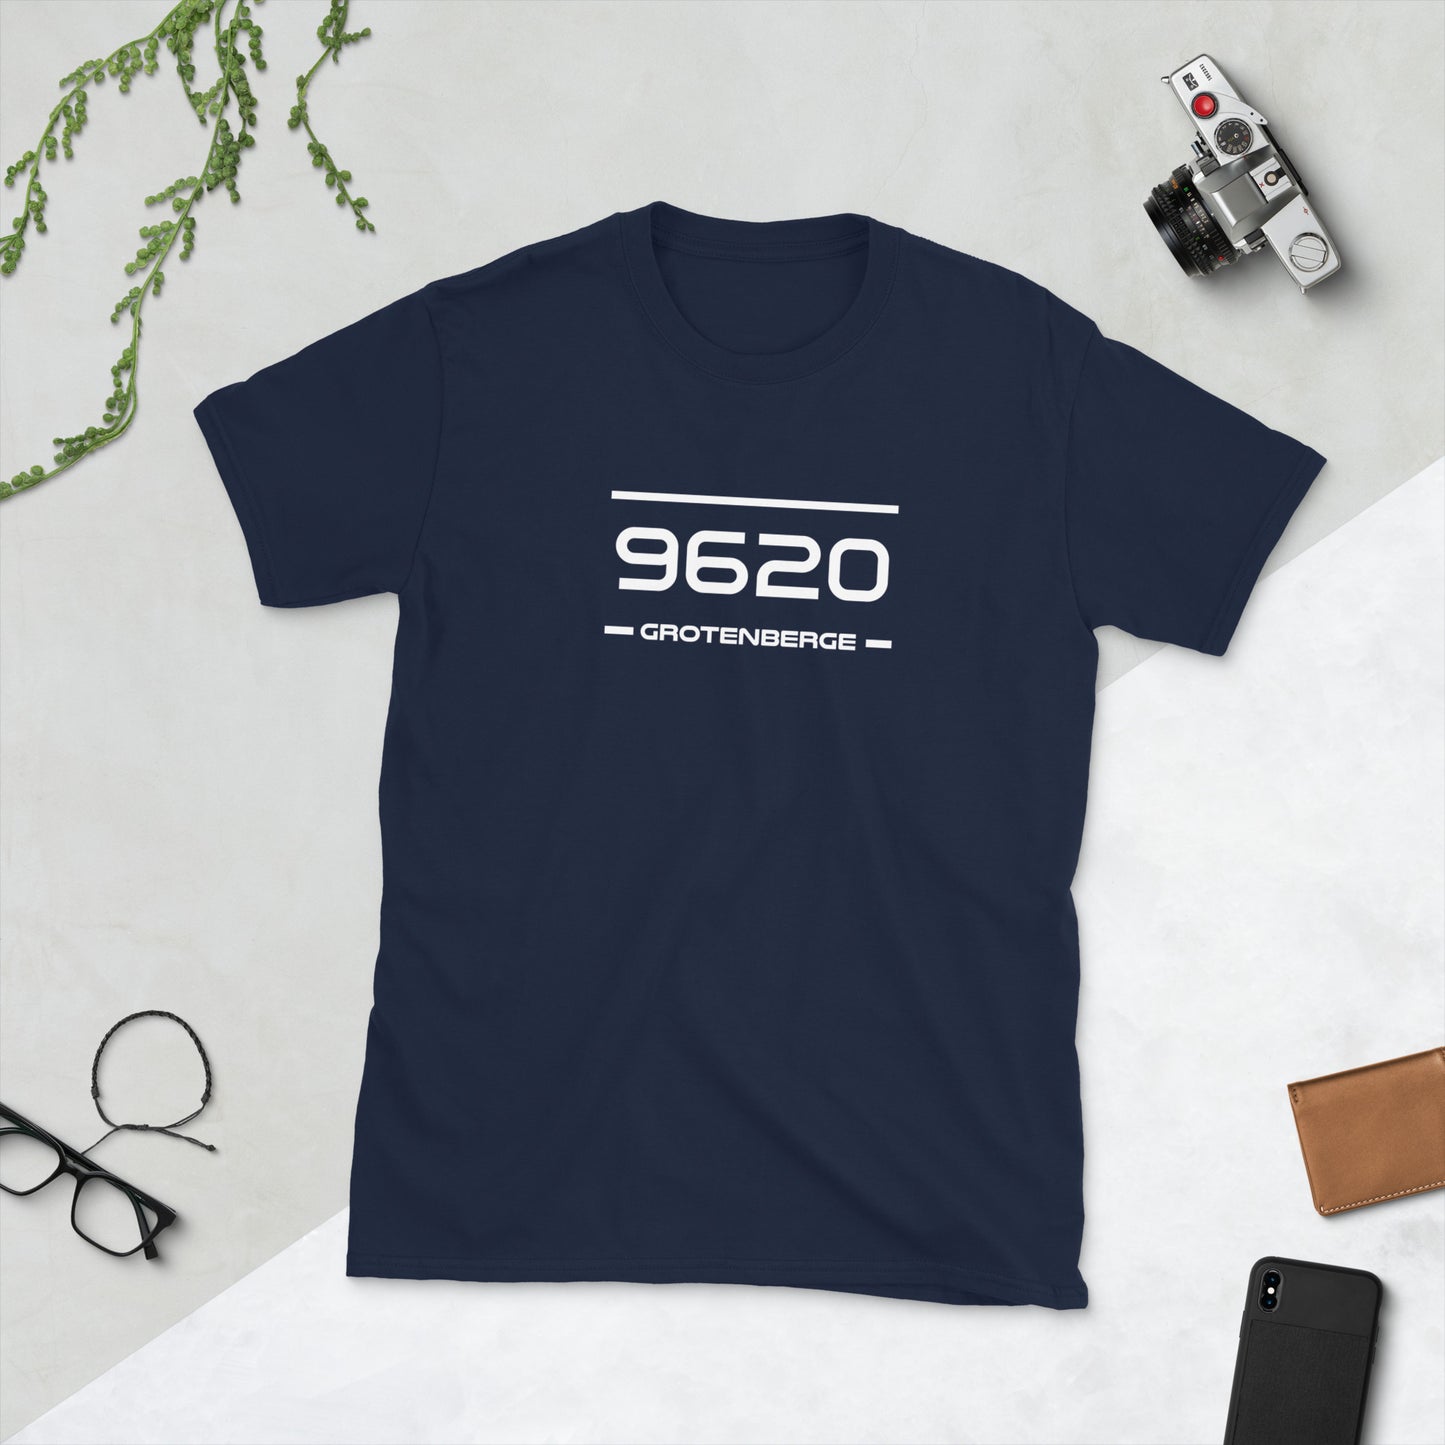 T-Shirt - 9620 - Grotenberge